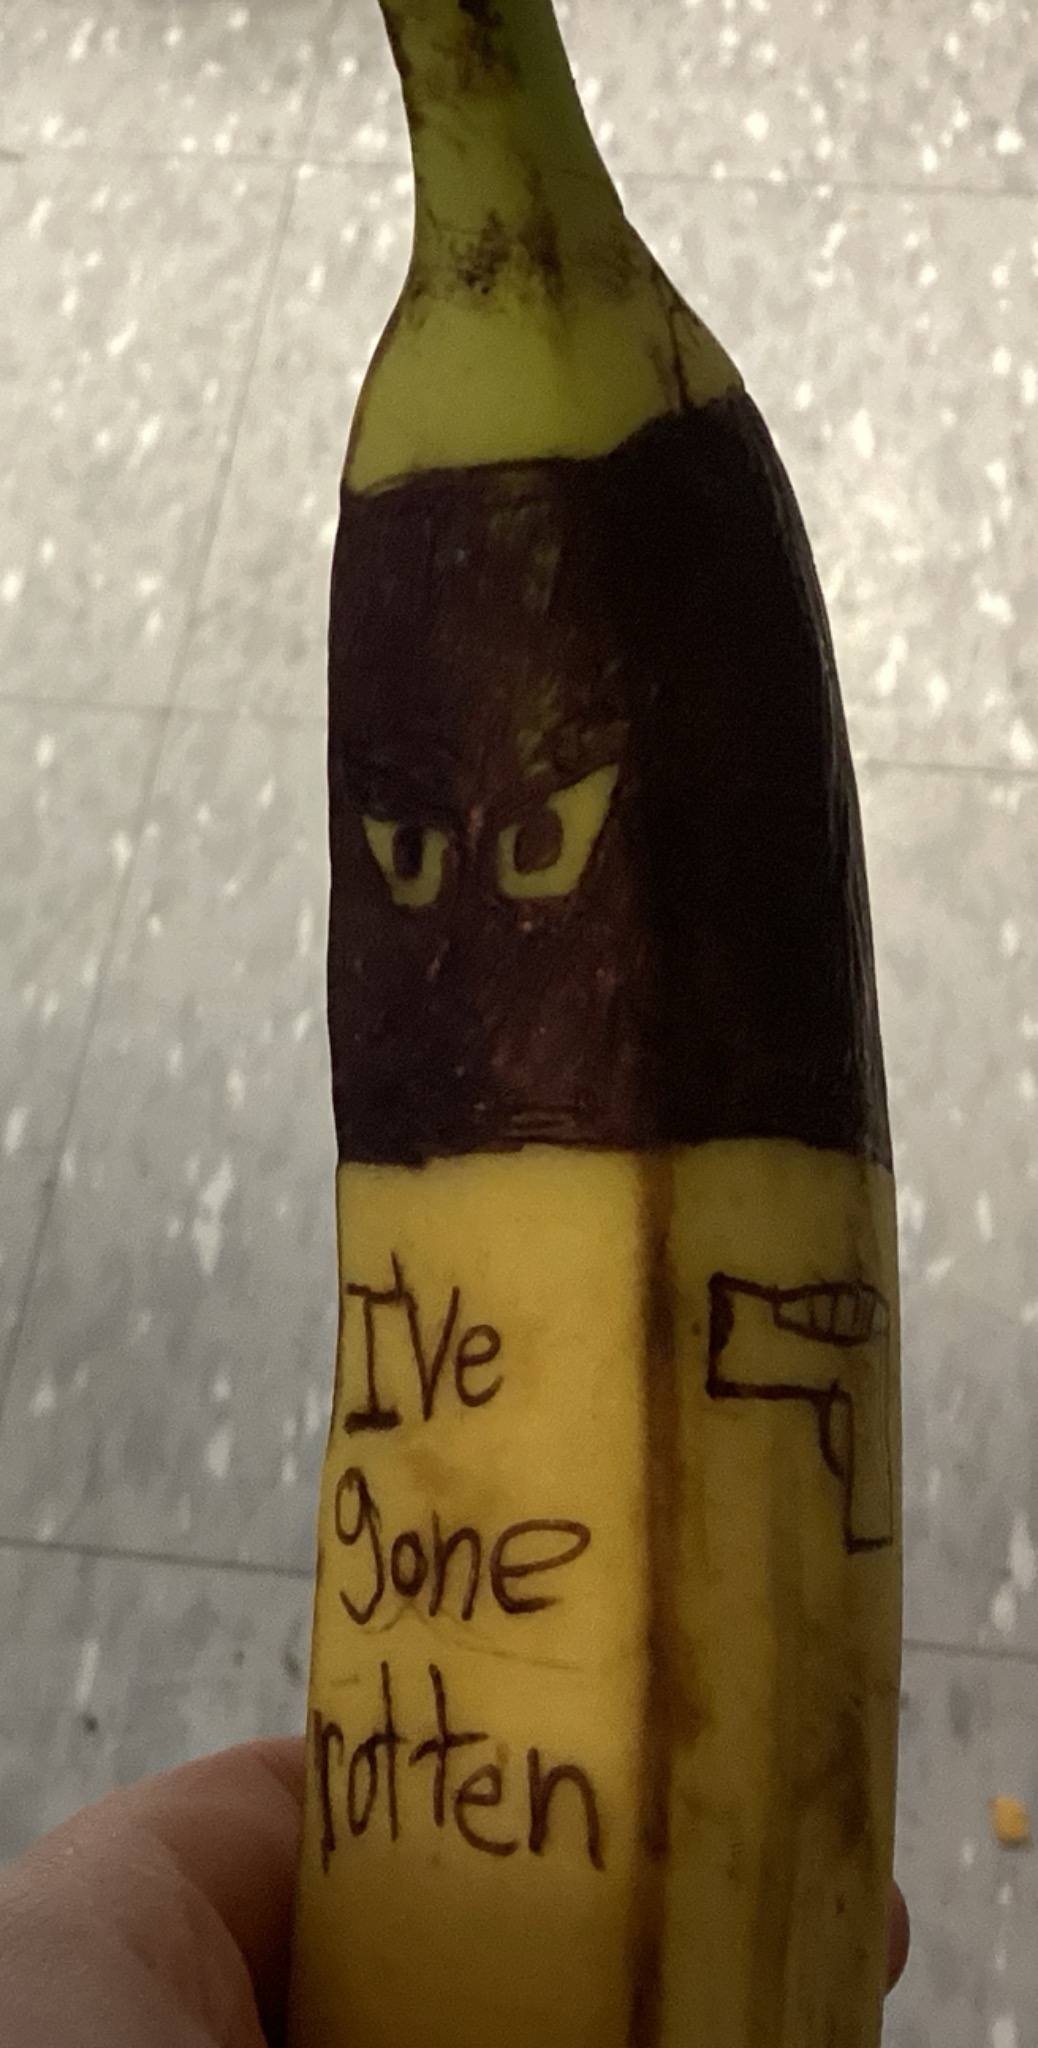 A rotten banana